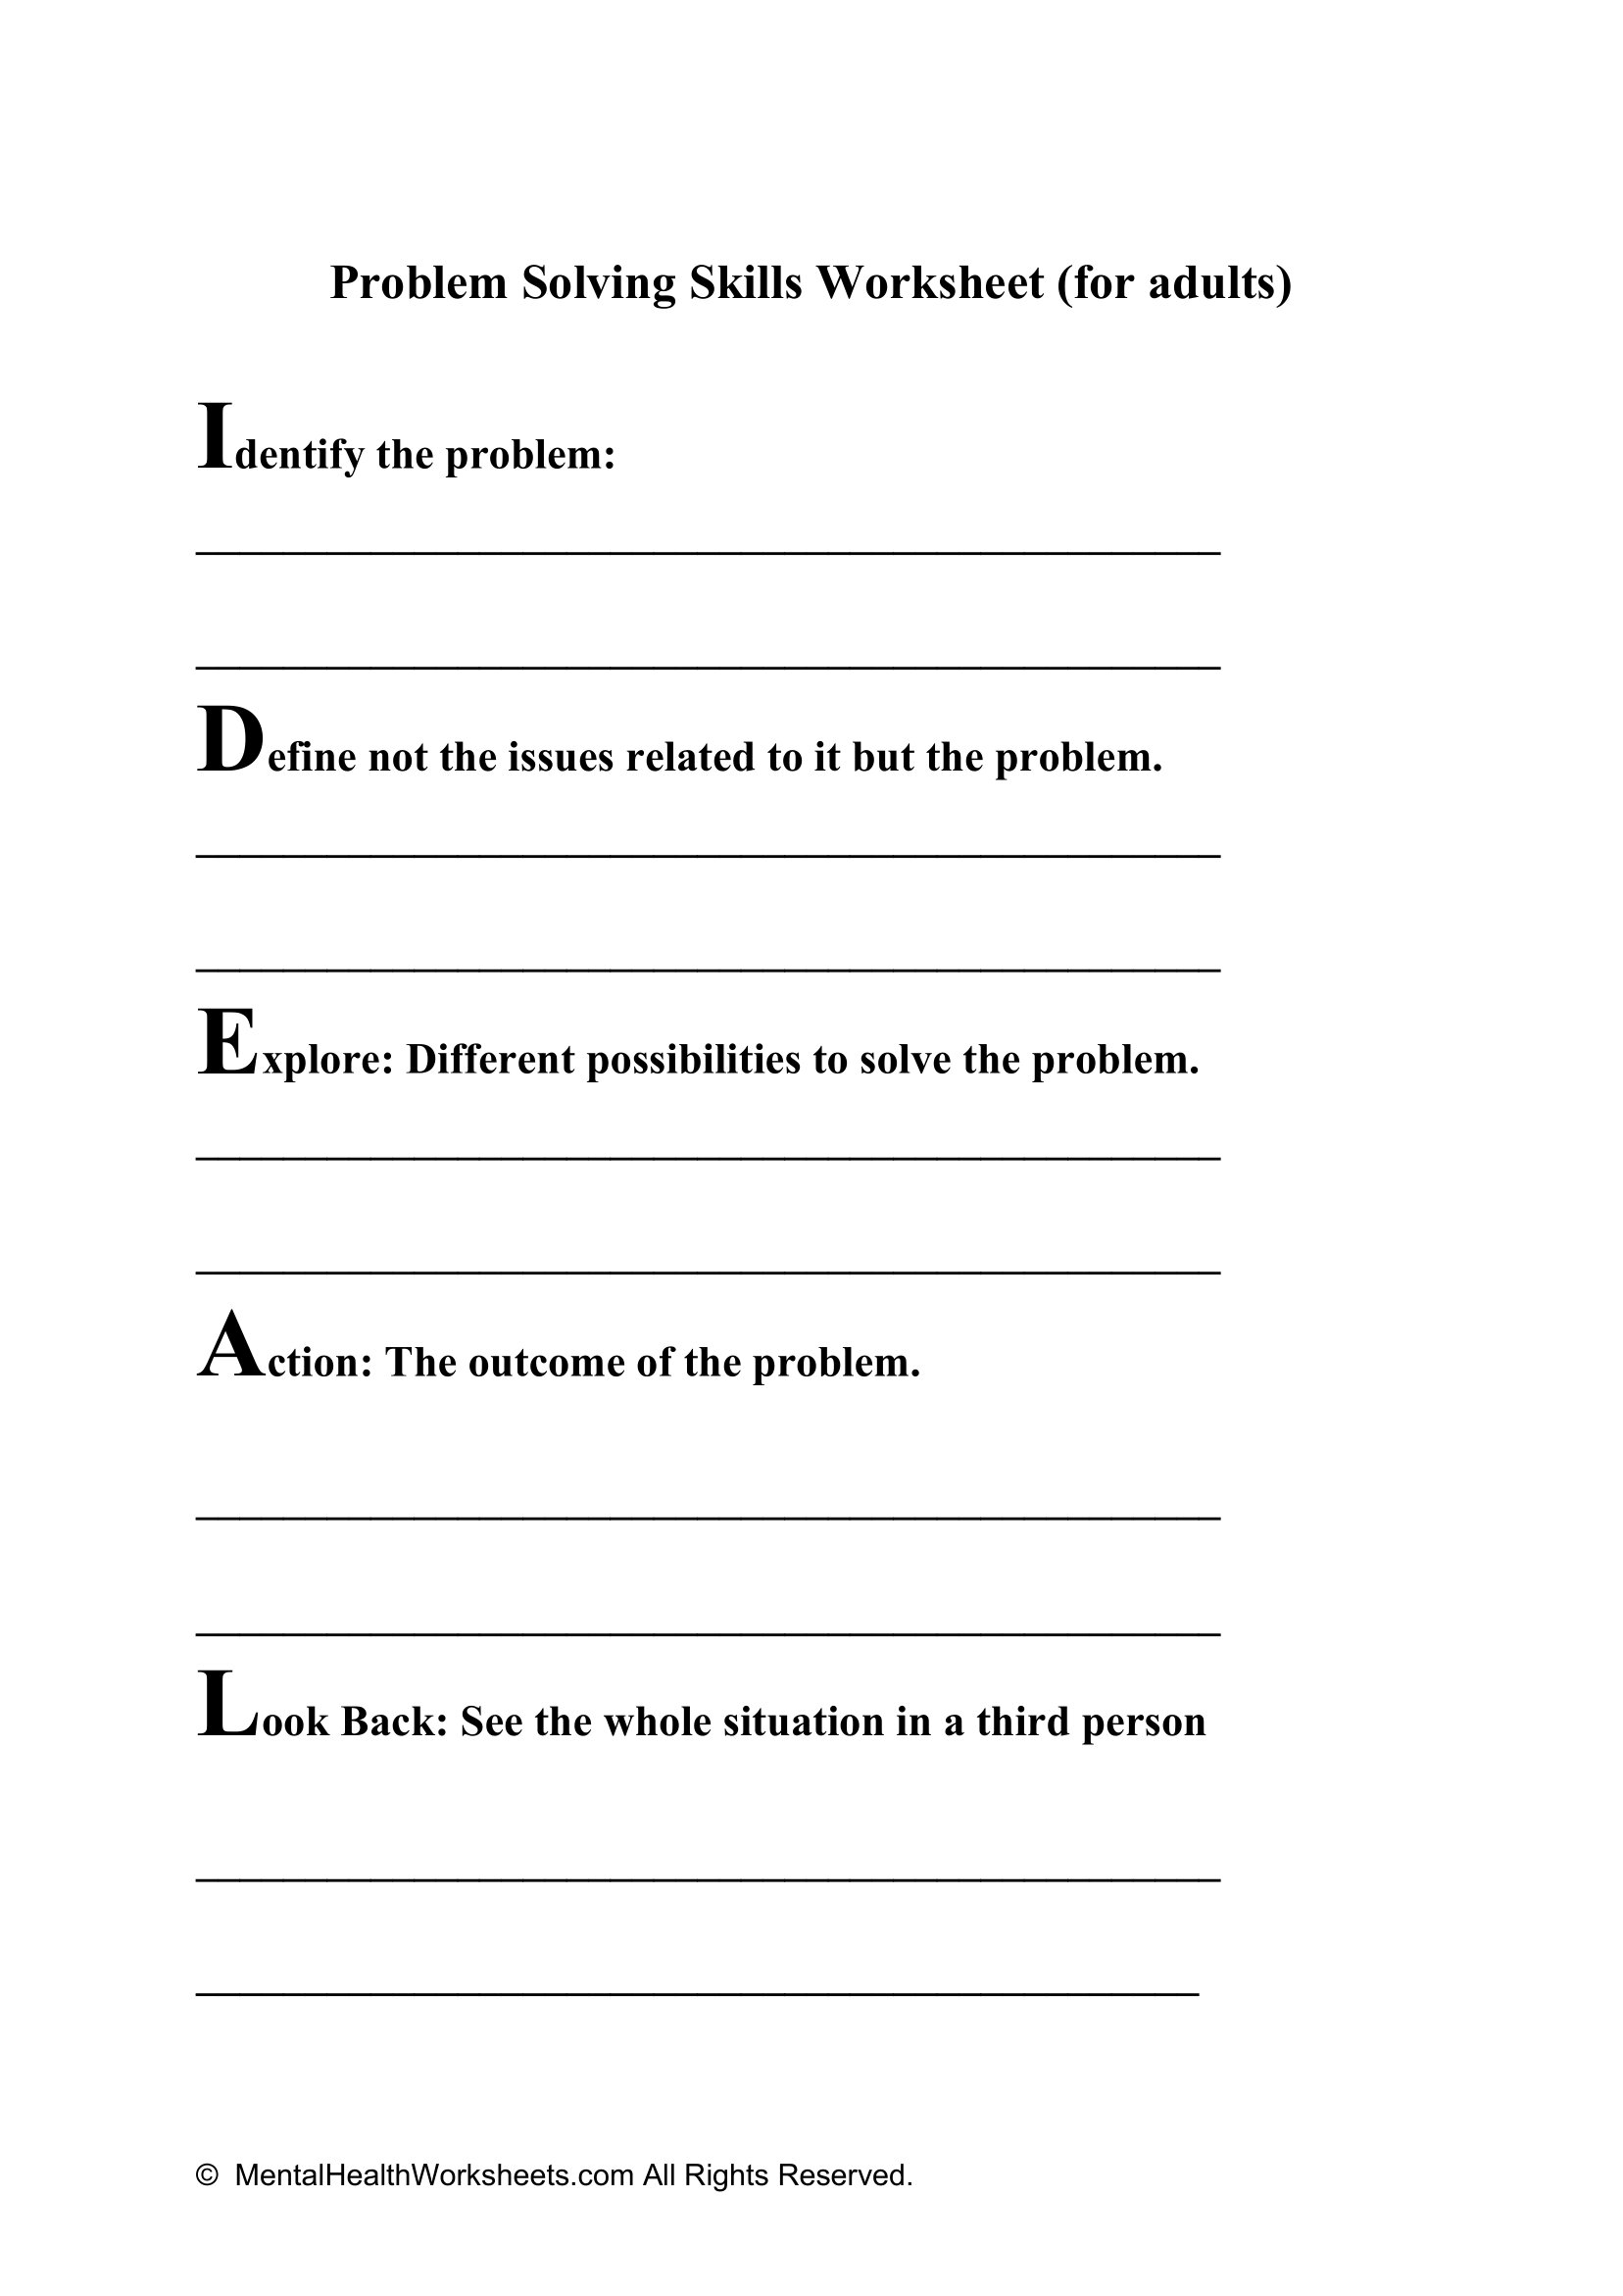 problem solving scenarios for adults worksheets